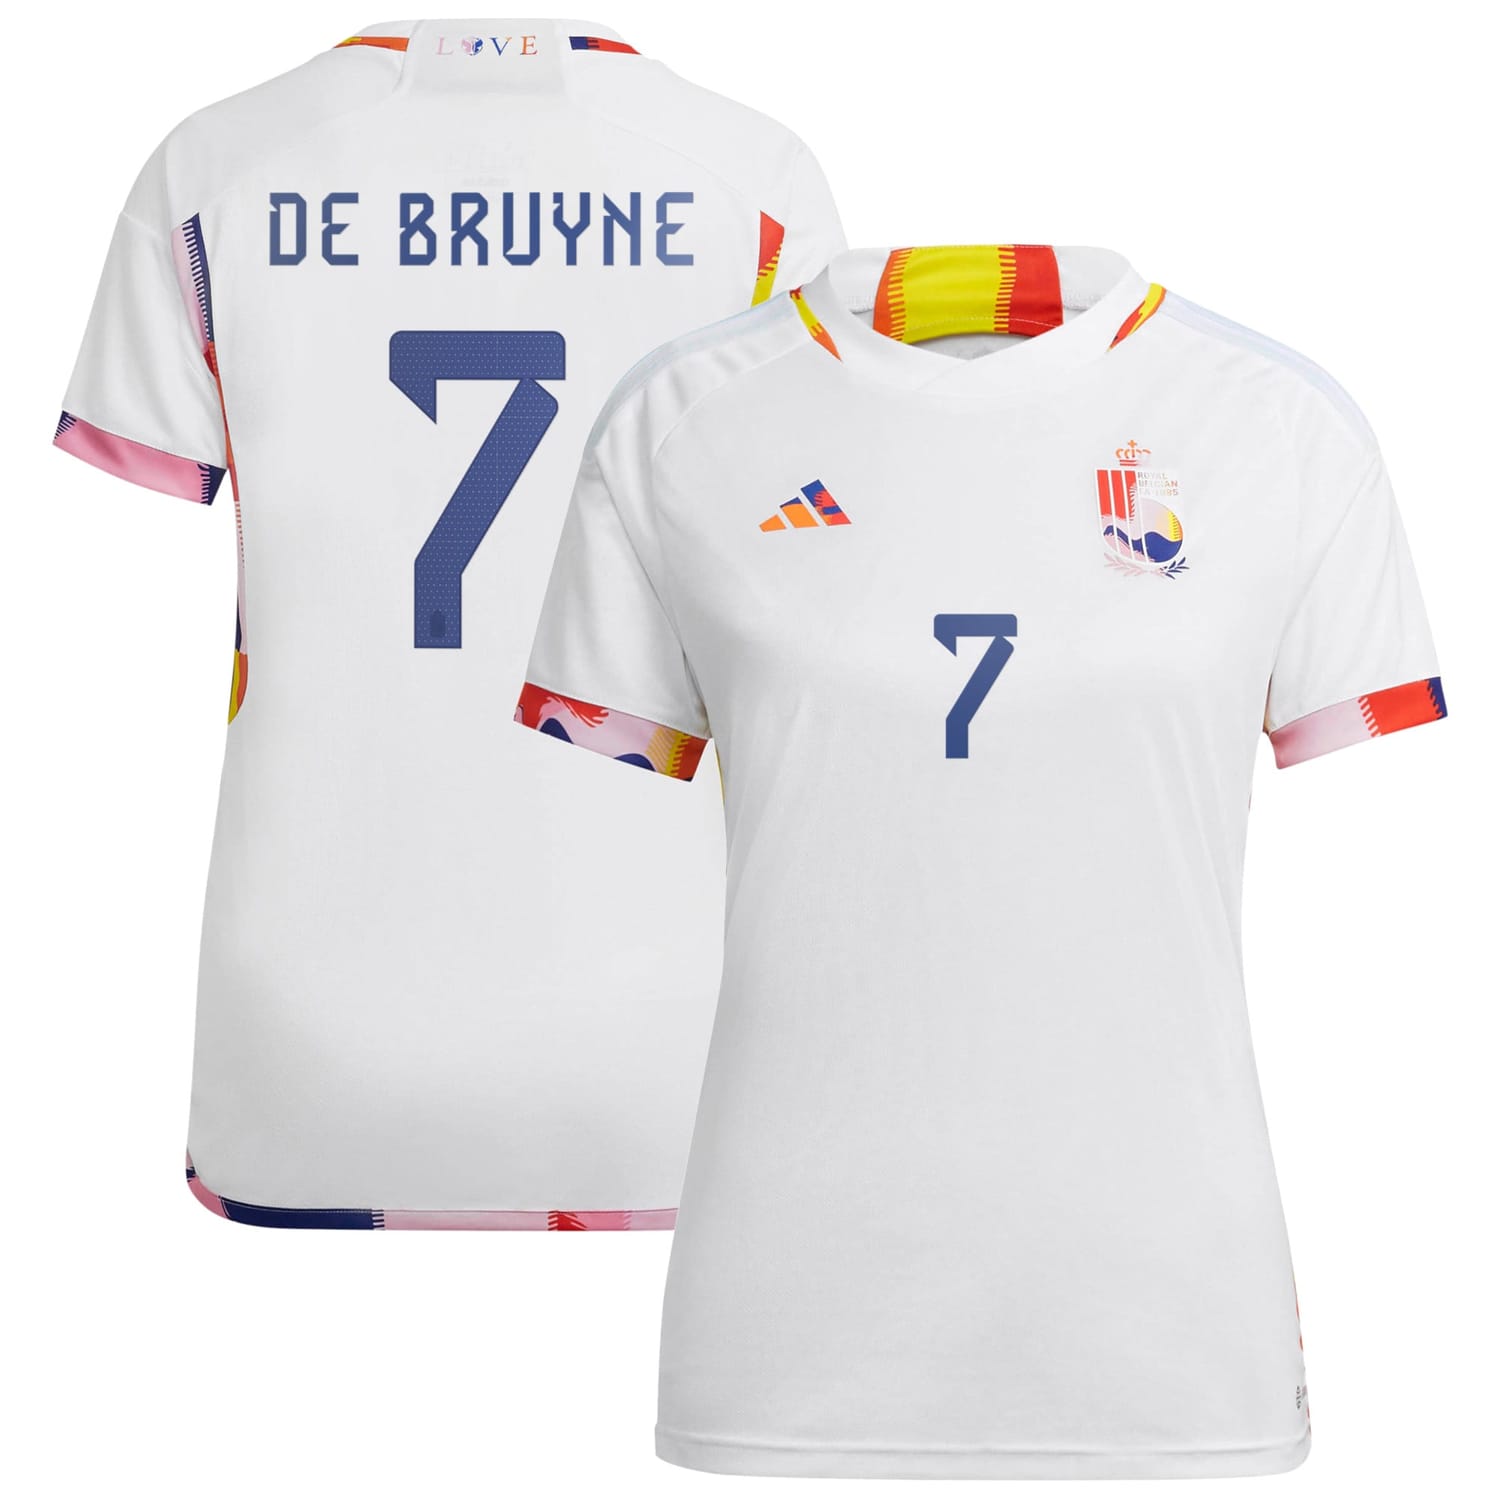 Belgium National Team Away Jersey Shirt player Kevin De Bruyne 7 printing for Women